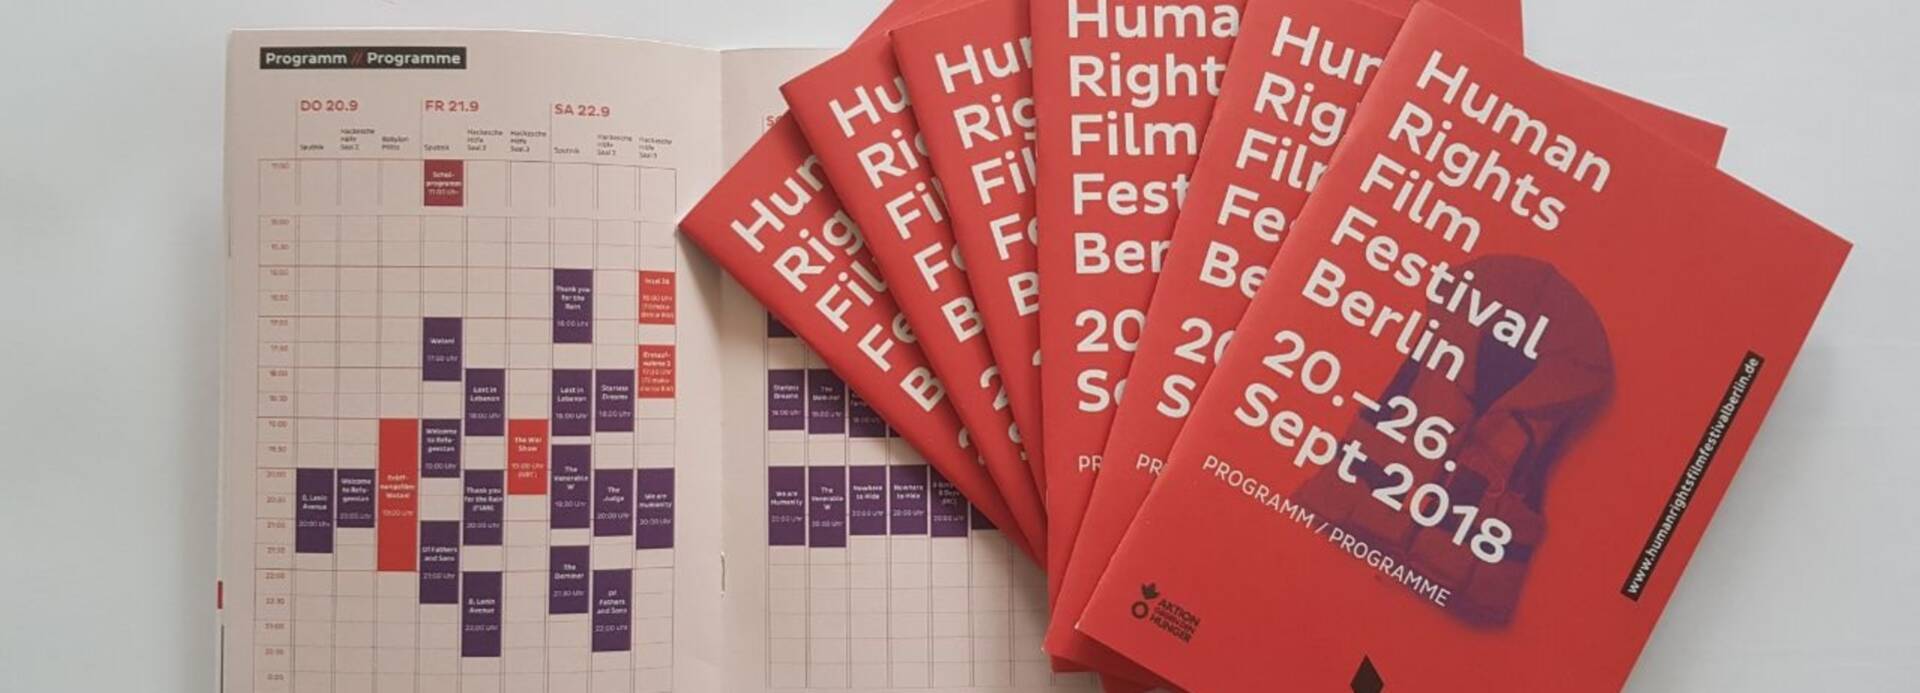 programm-human-rights-film-festival-berlin2